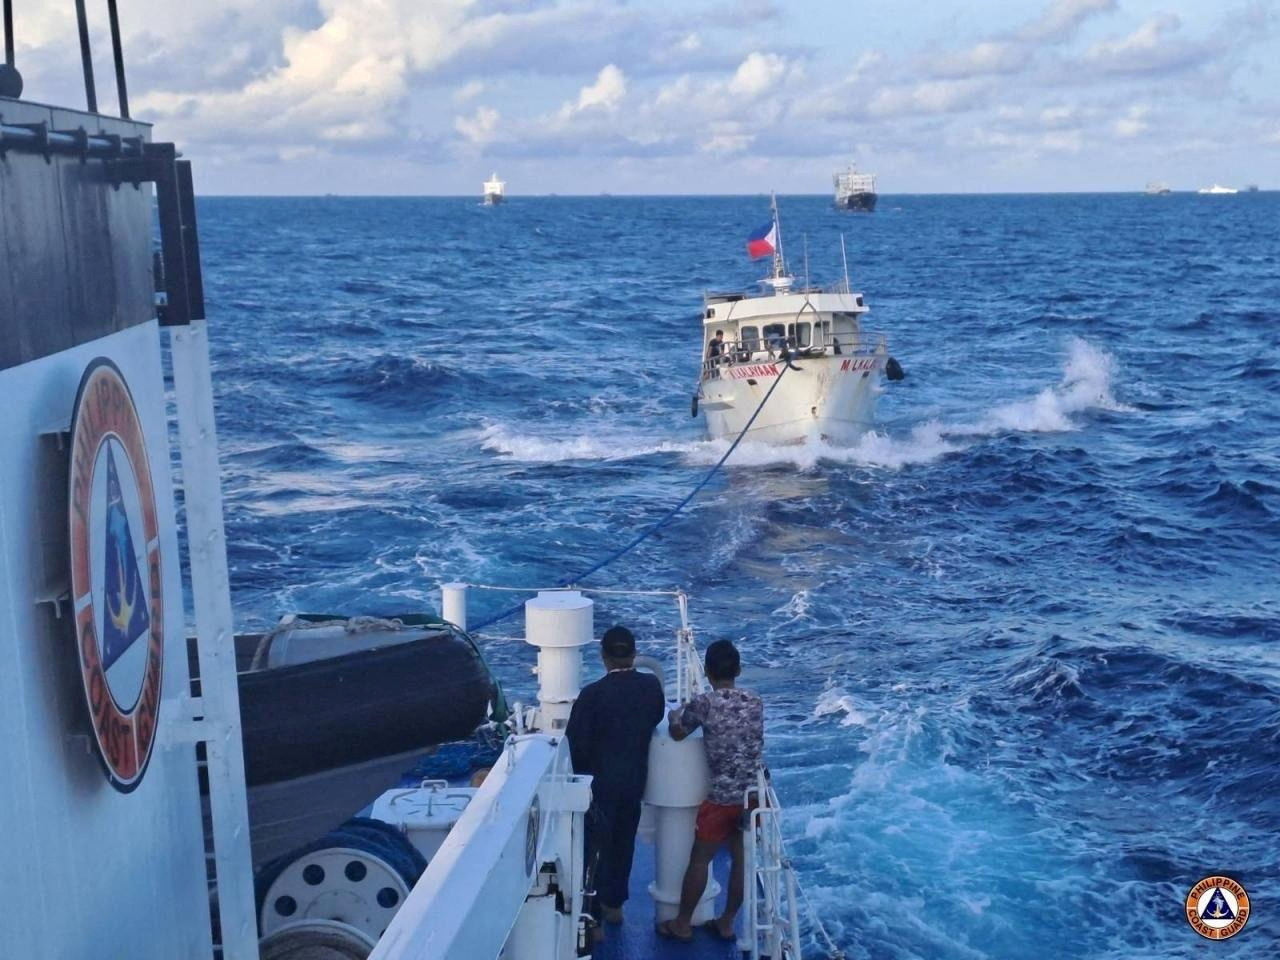 Manila summons China ambassador after sea incident